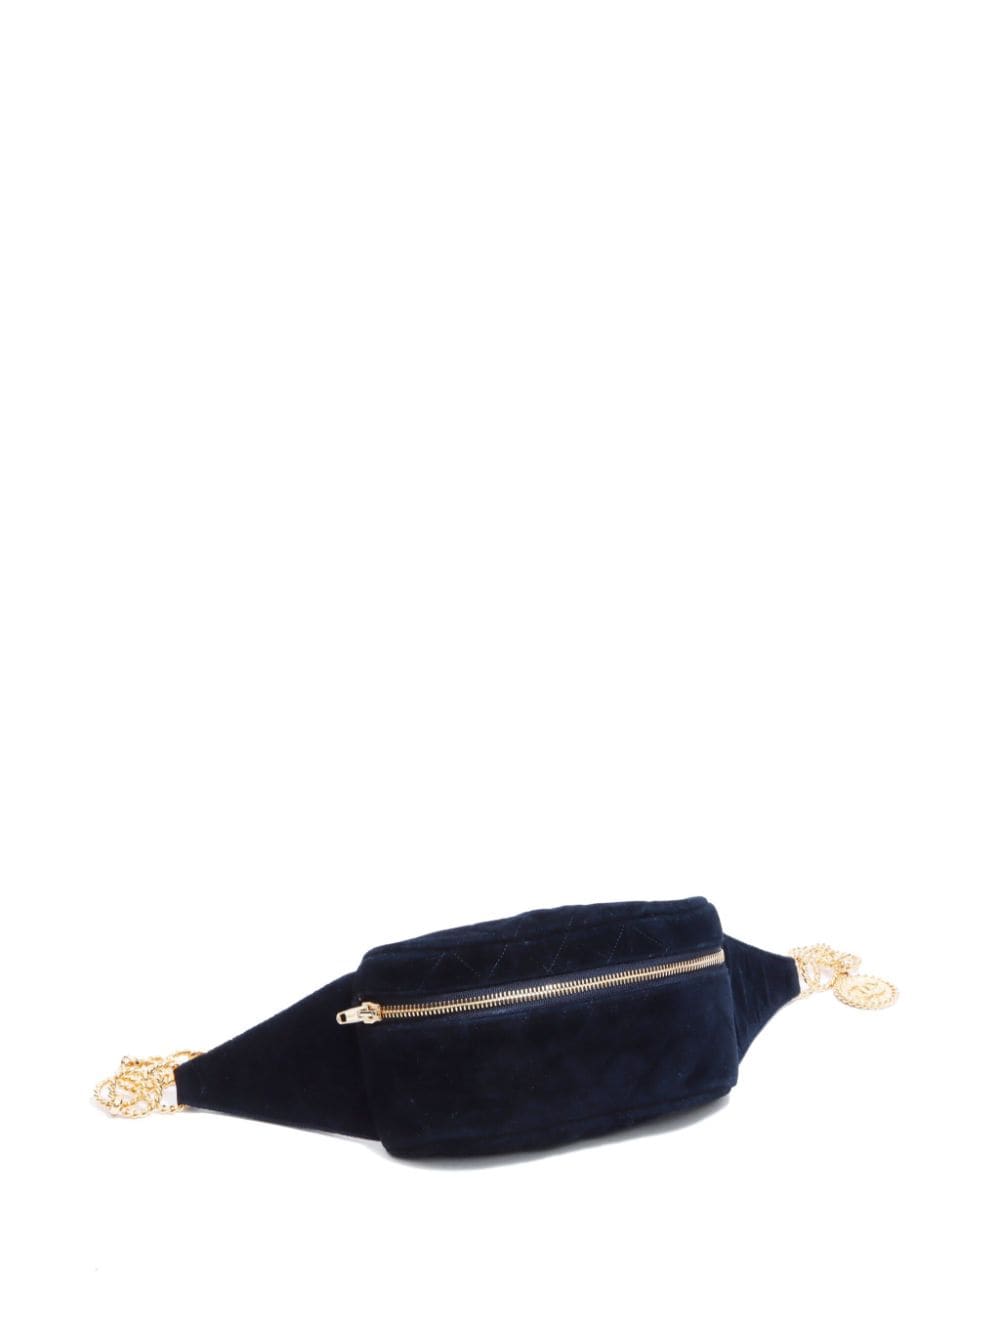 Pre-owned Chanel 2000s Velvet Quilted Belt Bag In Black